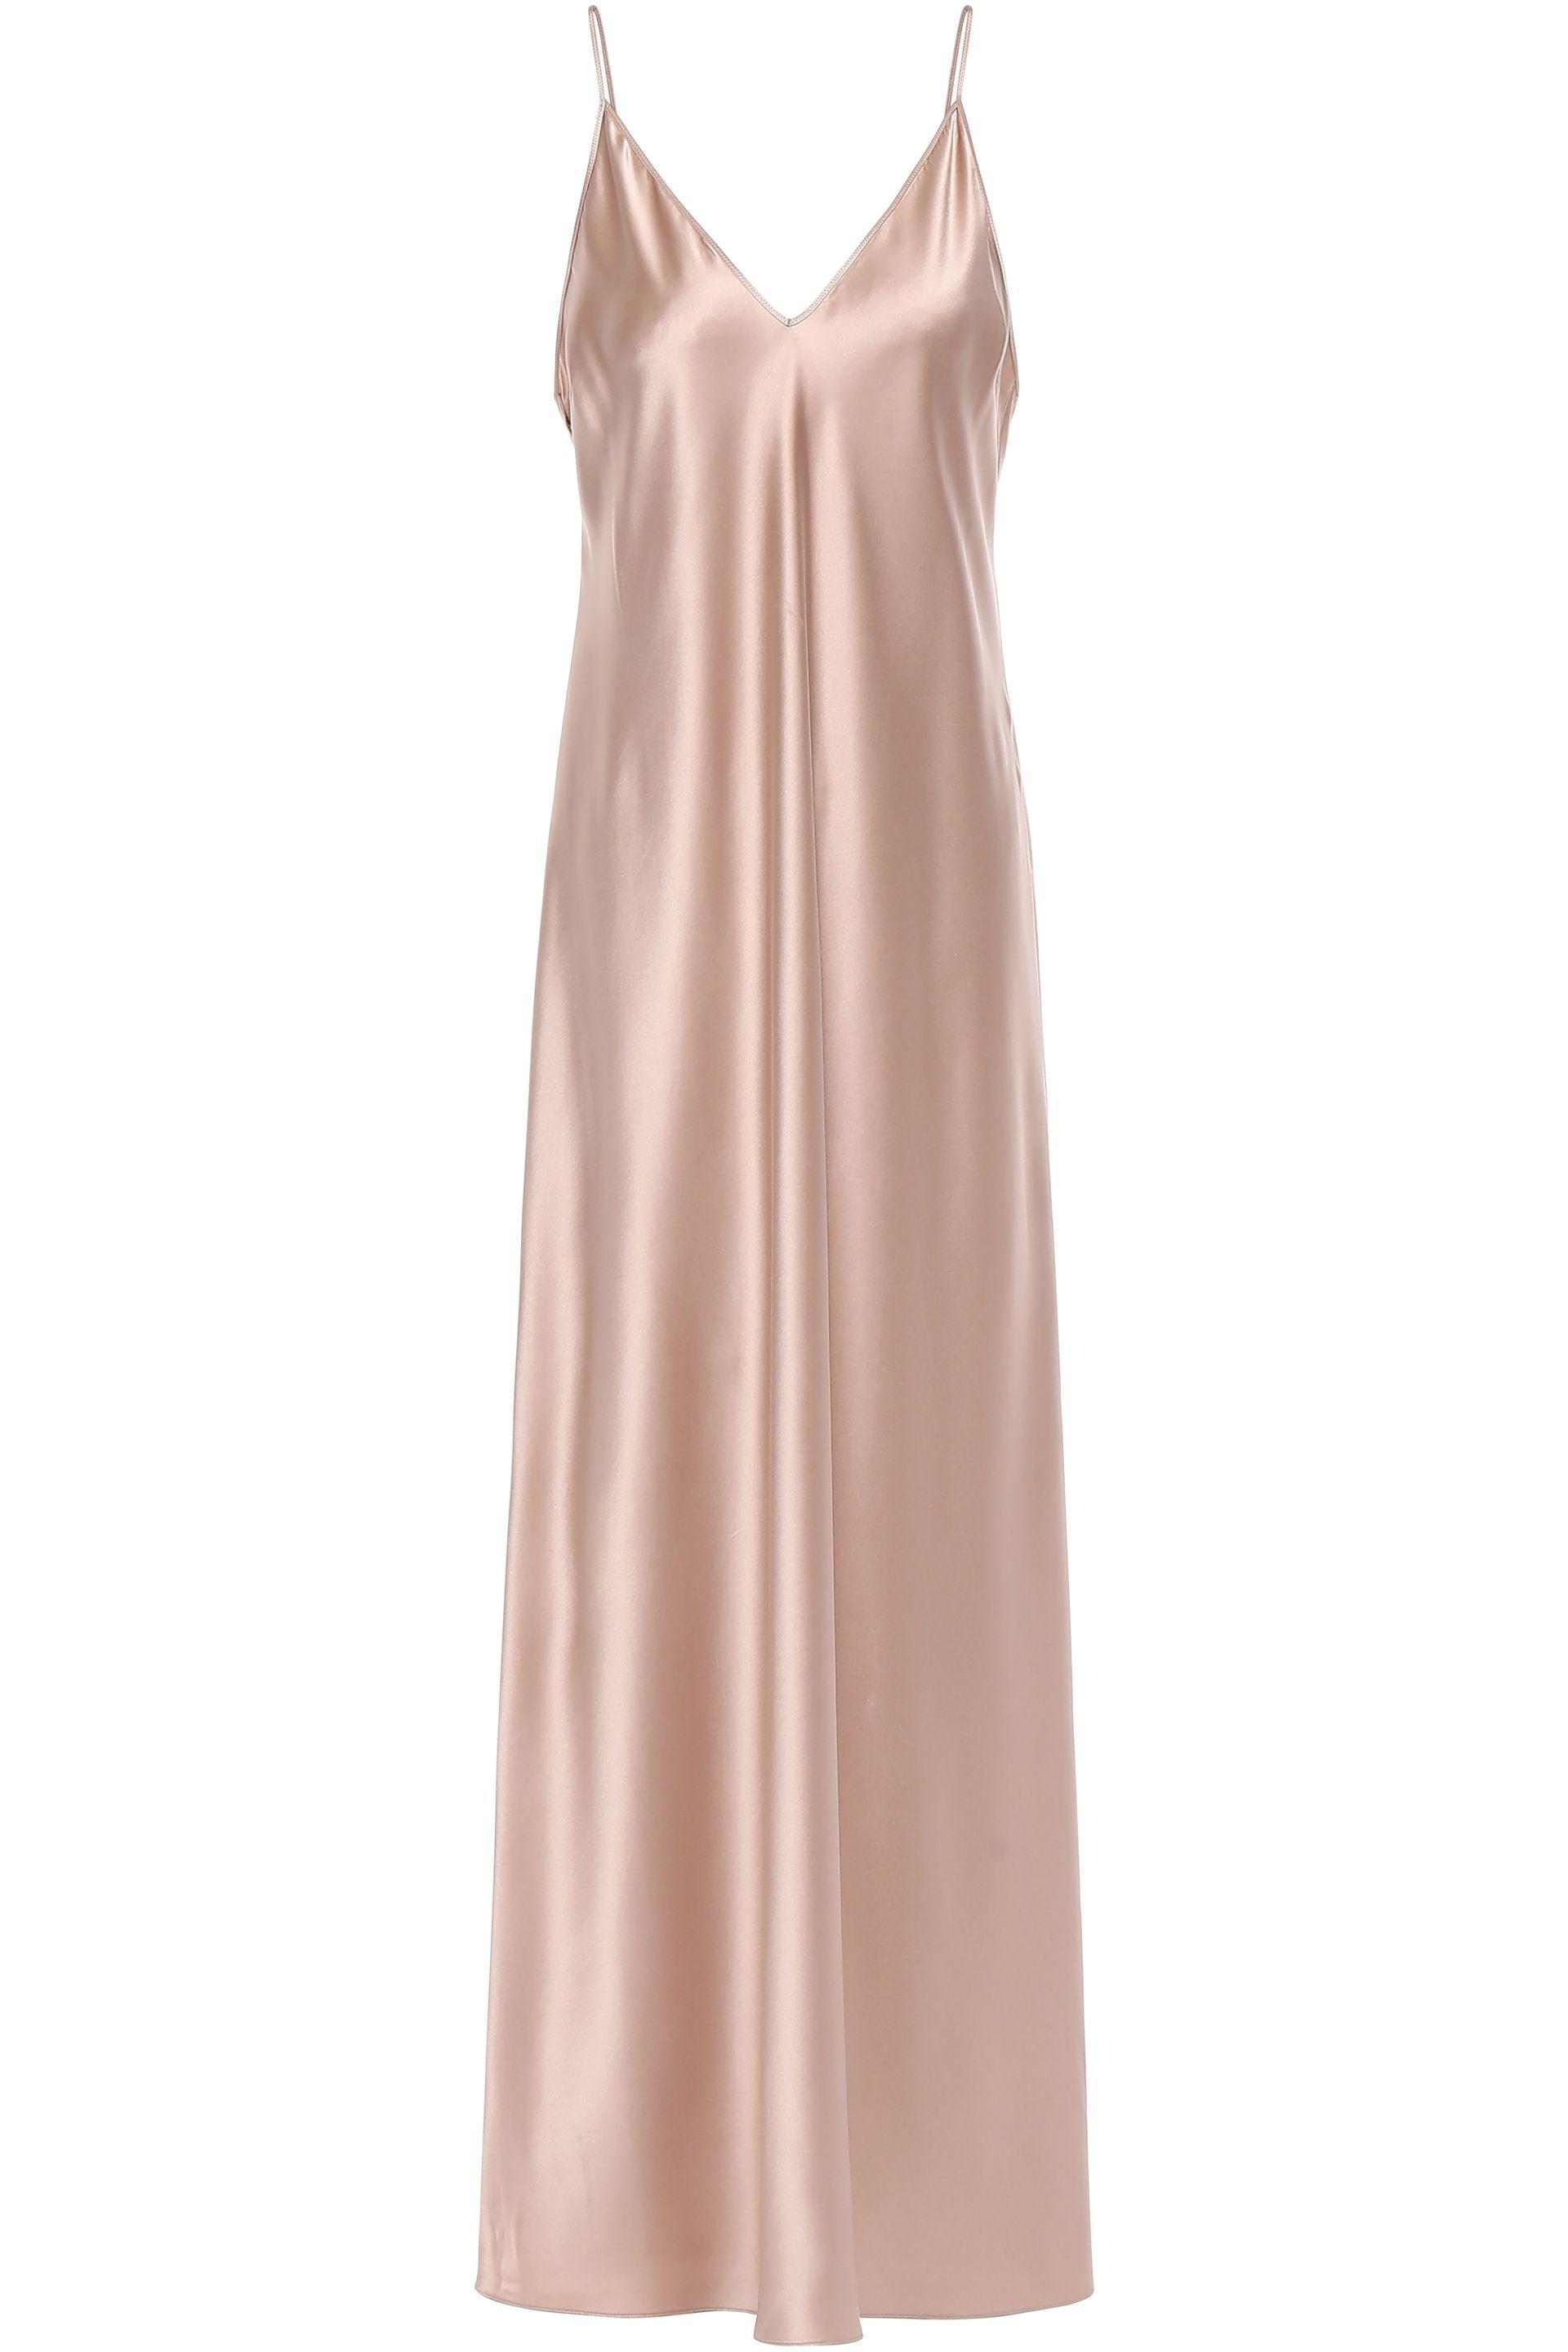 JOSEPH Silk-satin Maxi Slip Dress Rose Gold in Pink - Lyst